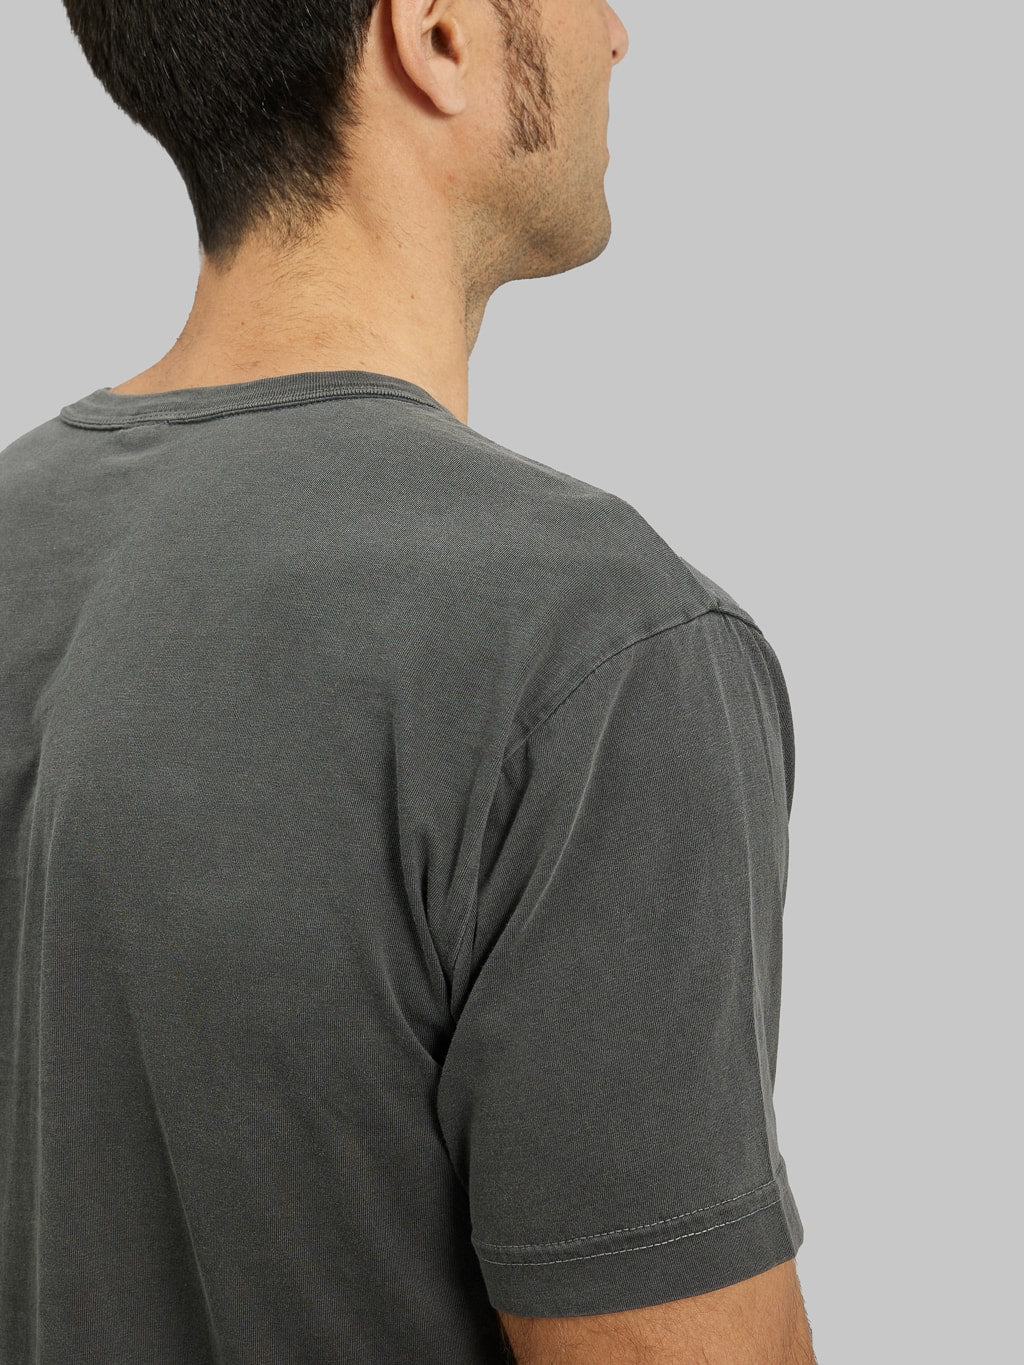 3sixteen Garment Dyed Pima Pocket Tshirt smoke back details